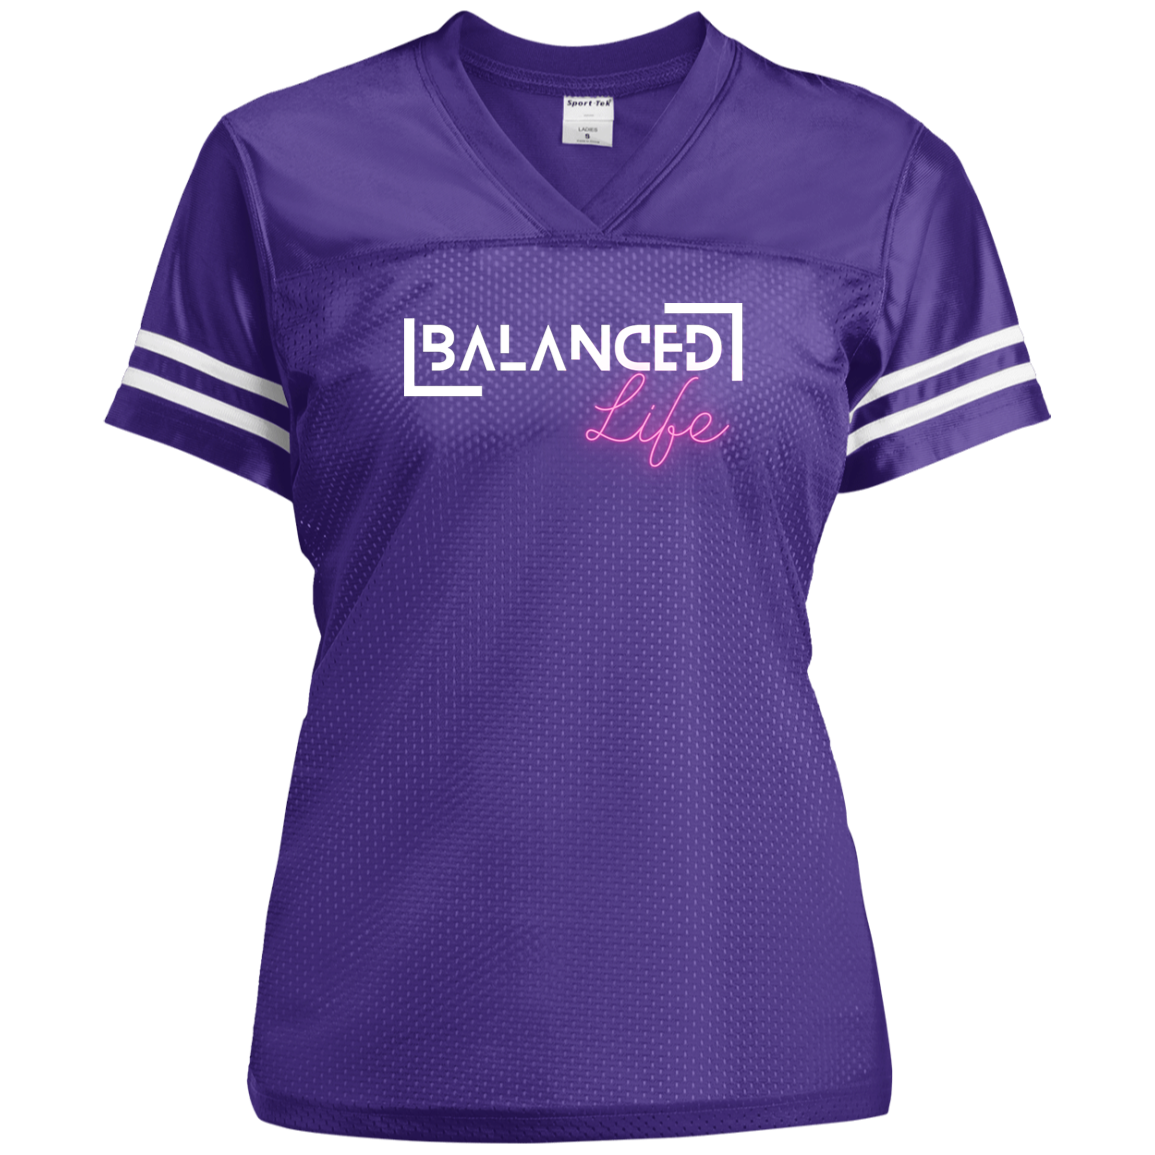 Balanced Life Ladies’ Replica Jersey